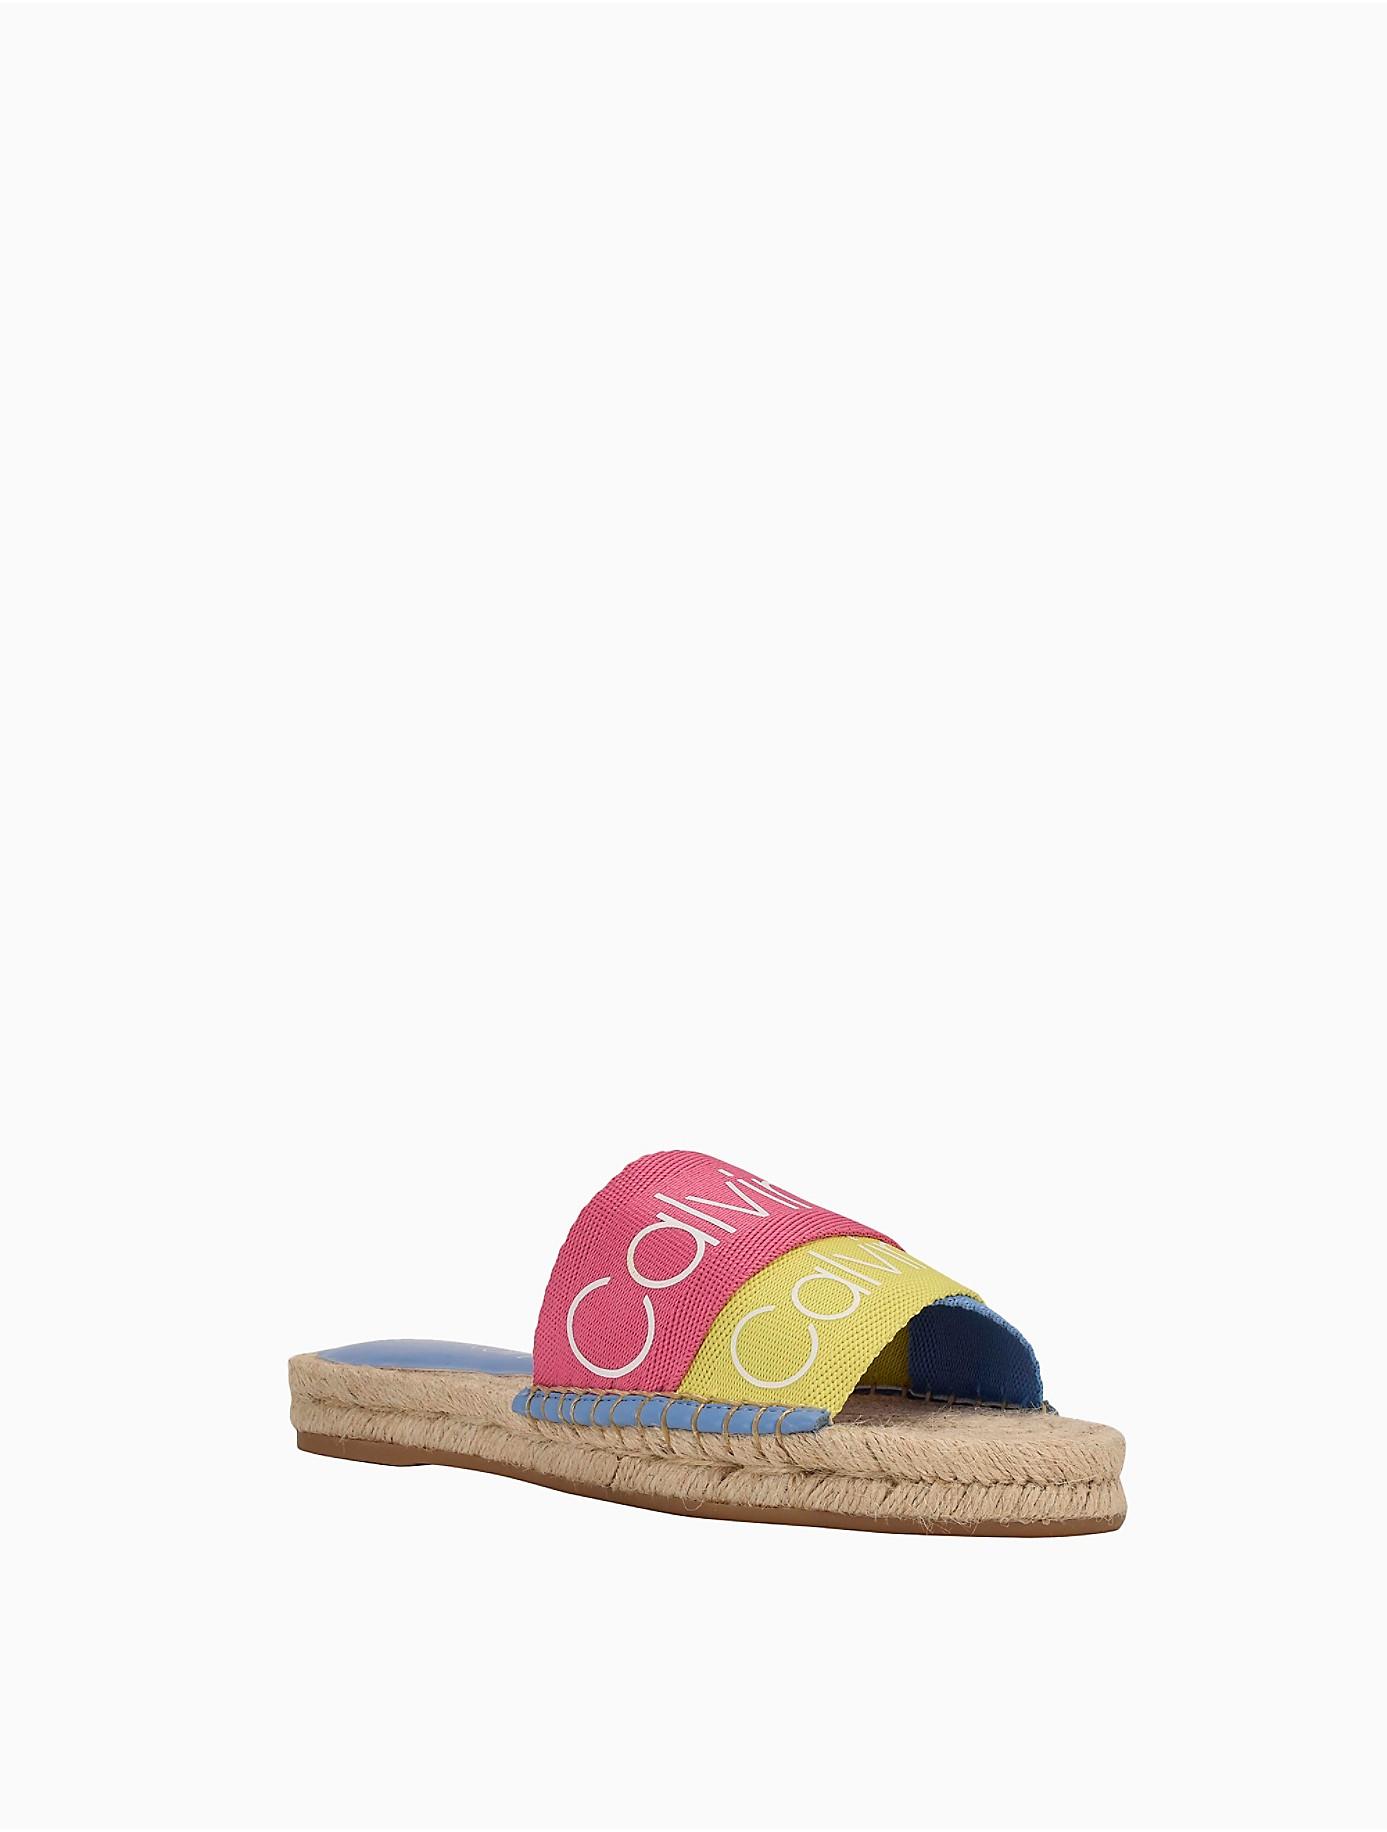 Calvin Klein Tasha Espadrille Slide Sandal in Pink | Lyst Canada